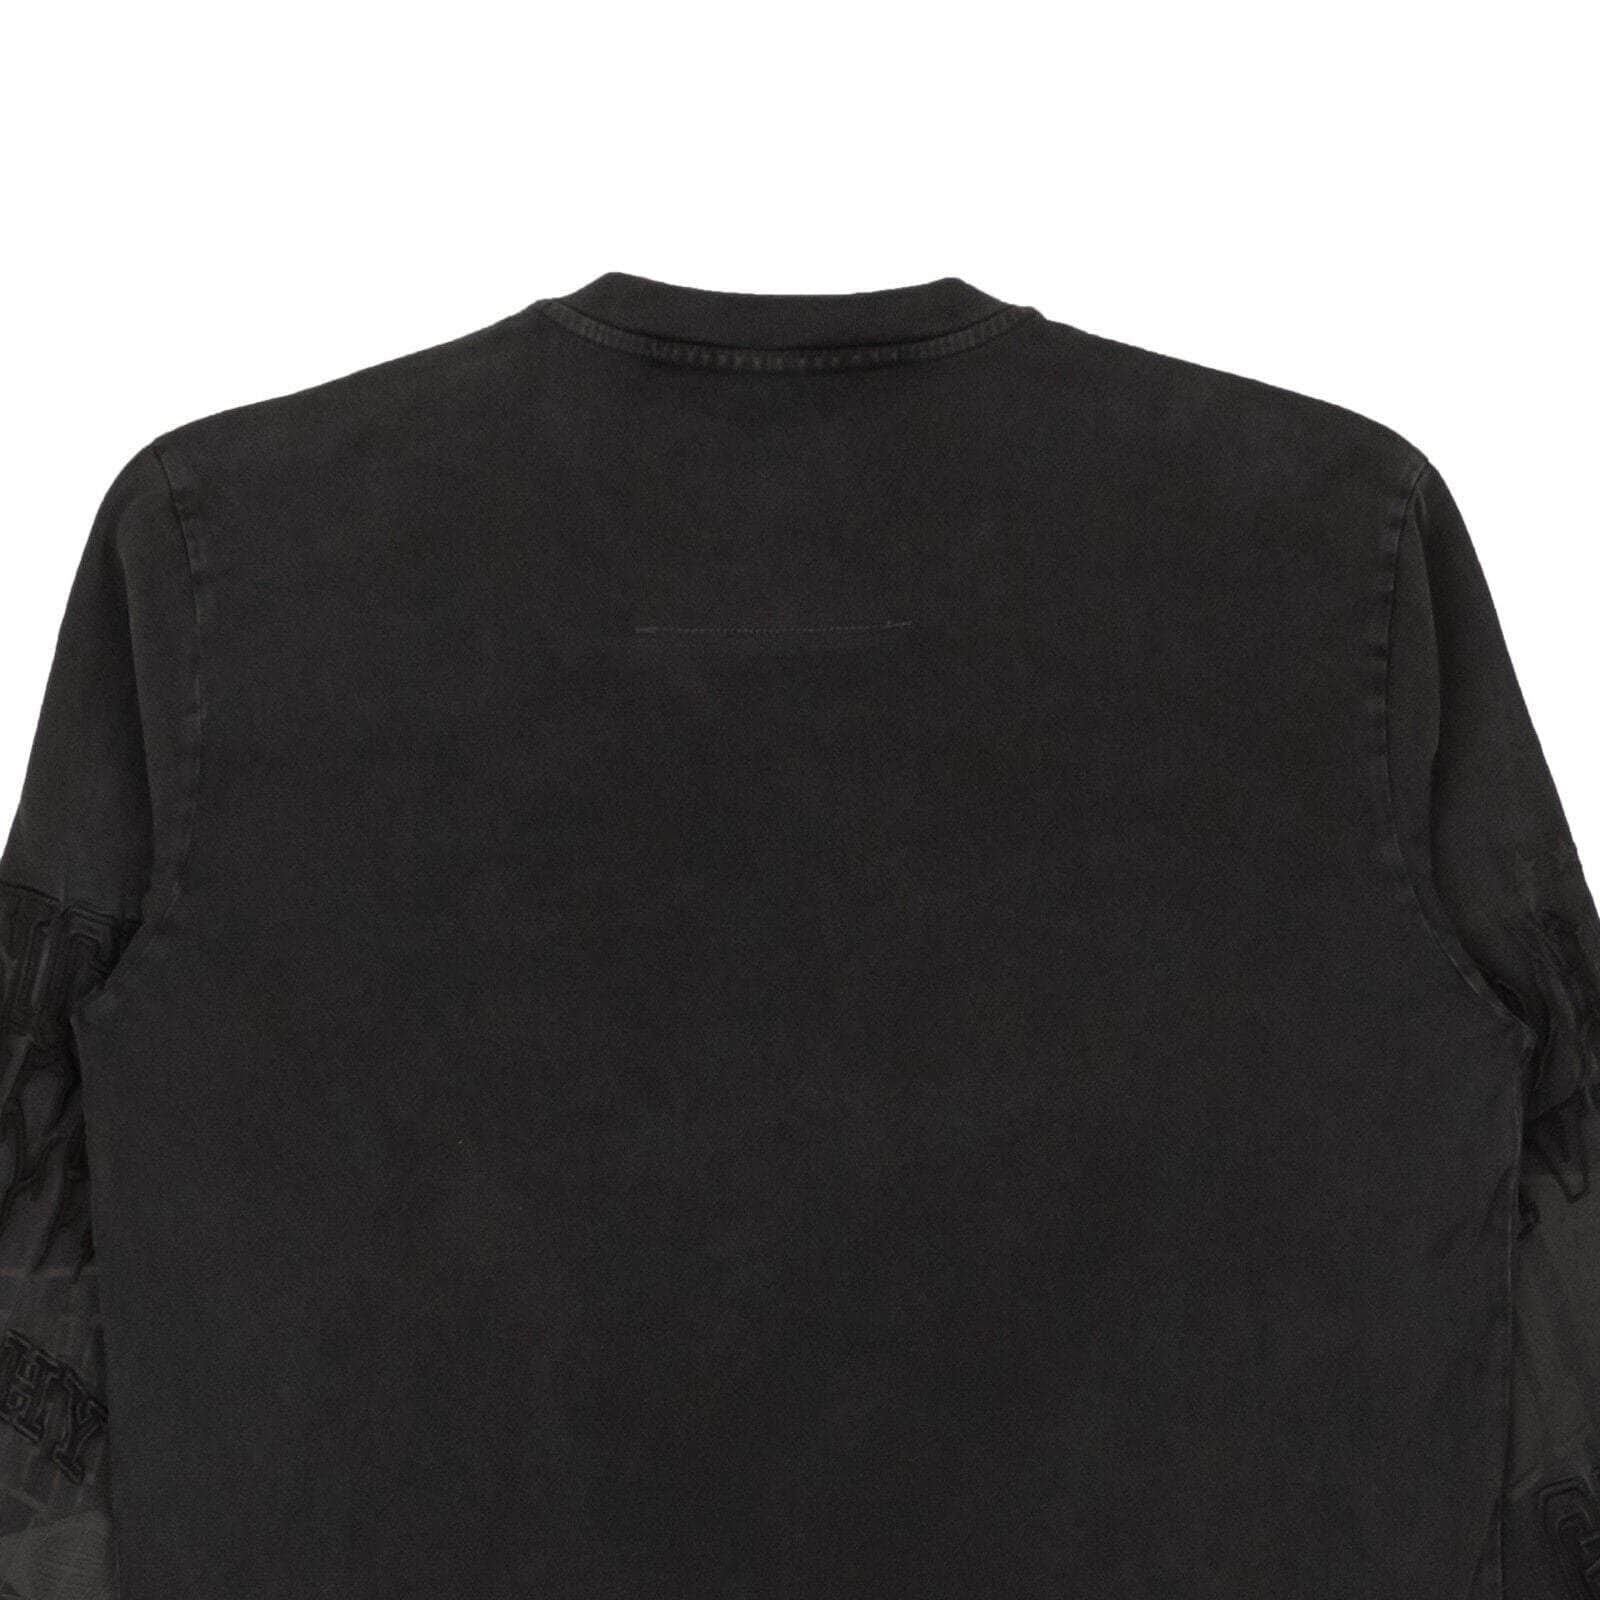 Givenchy Men's Black Cotton Shirt